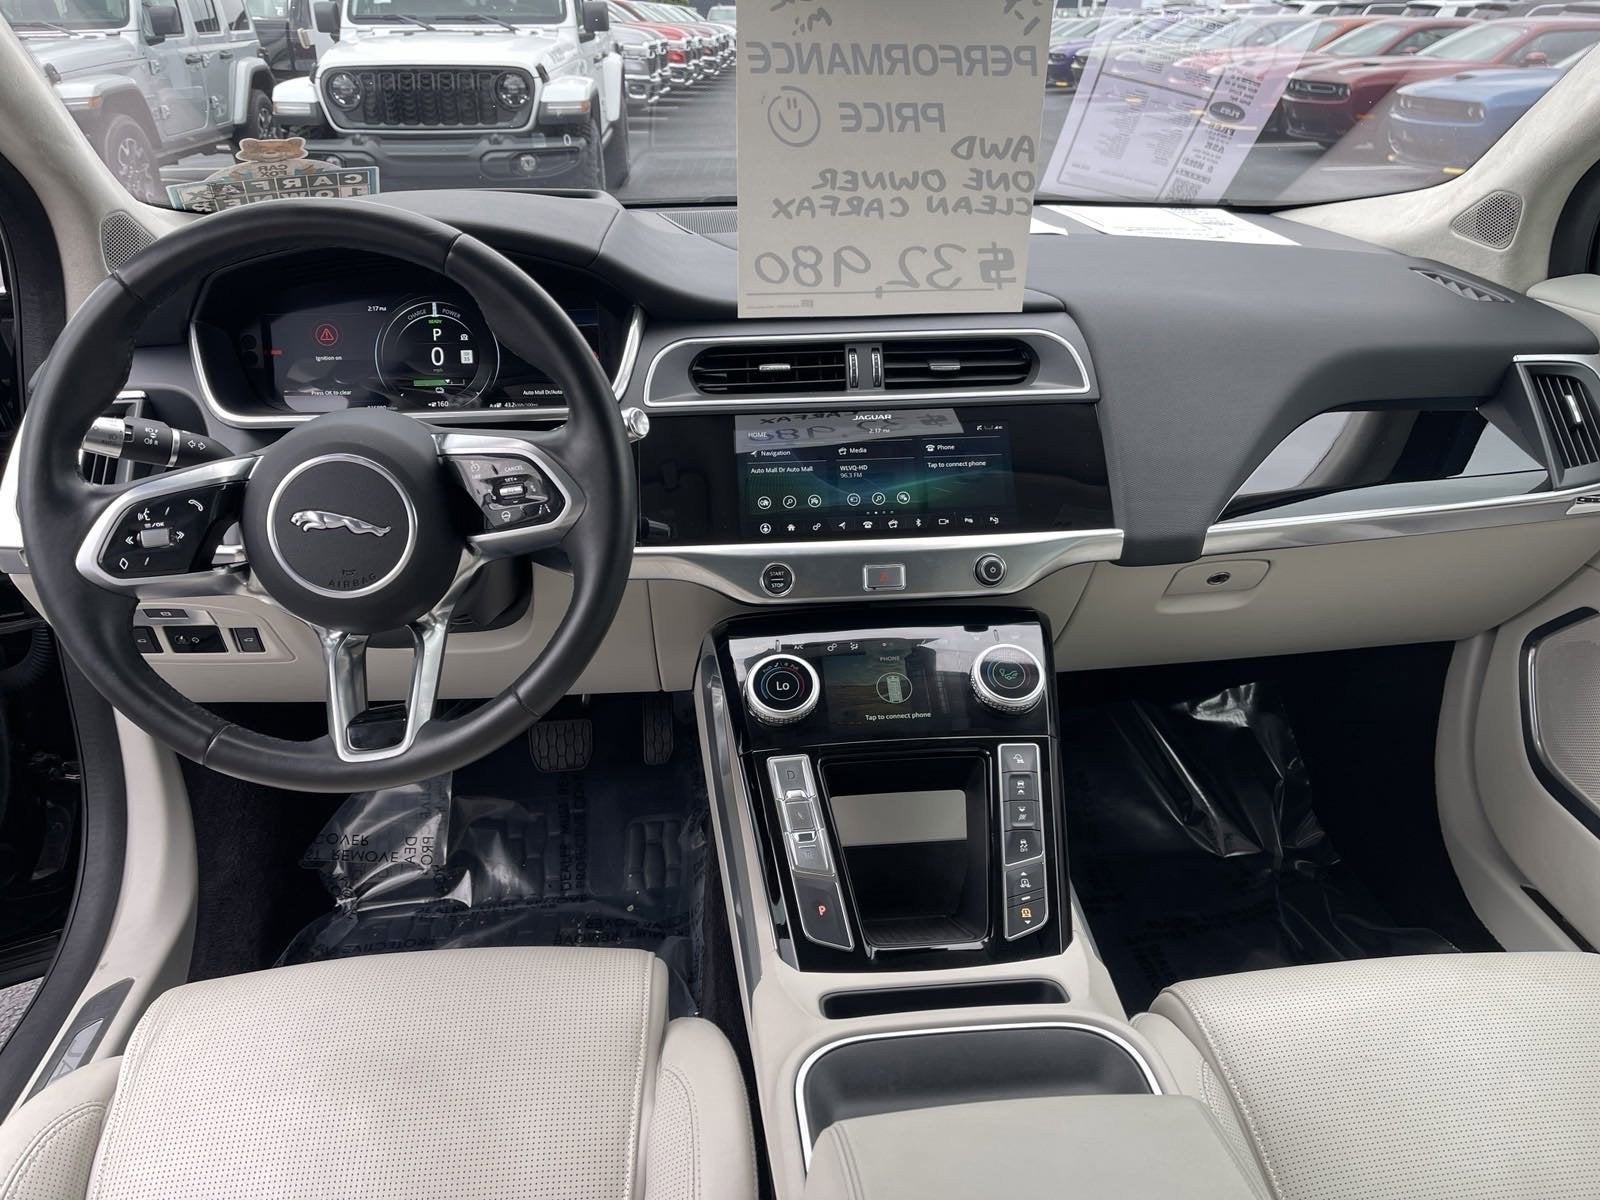 2019 Jaguar I-PACE First Edition